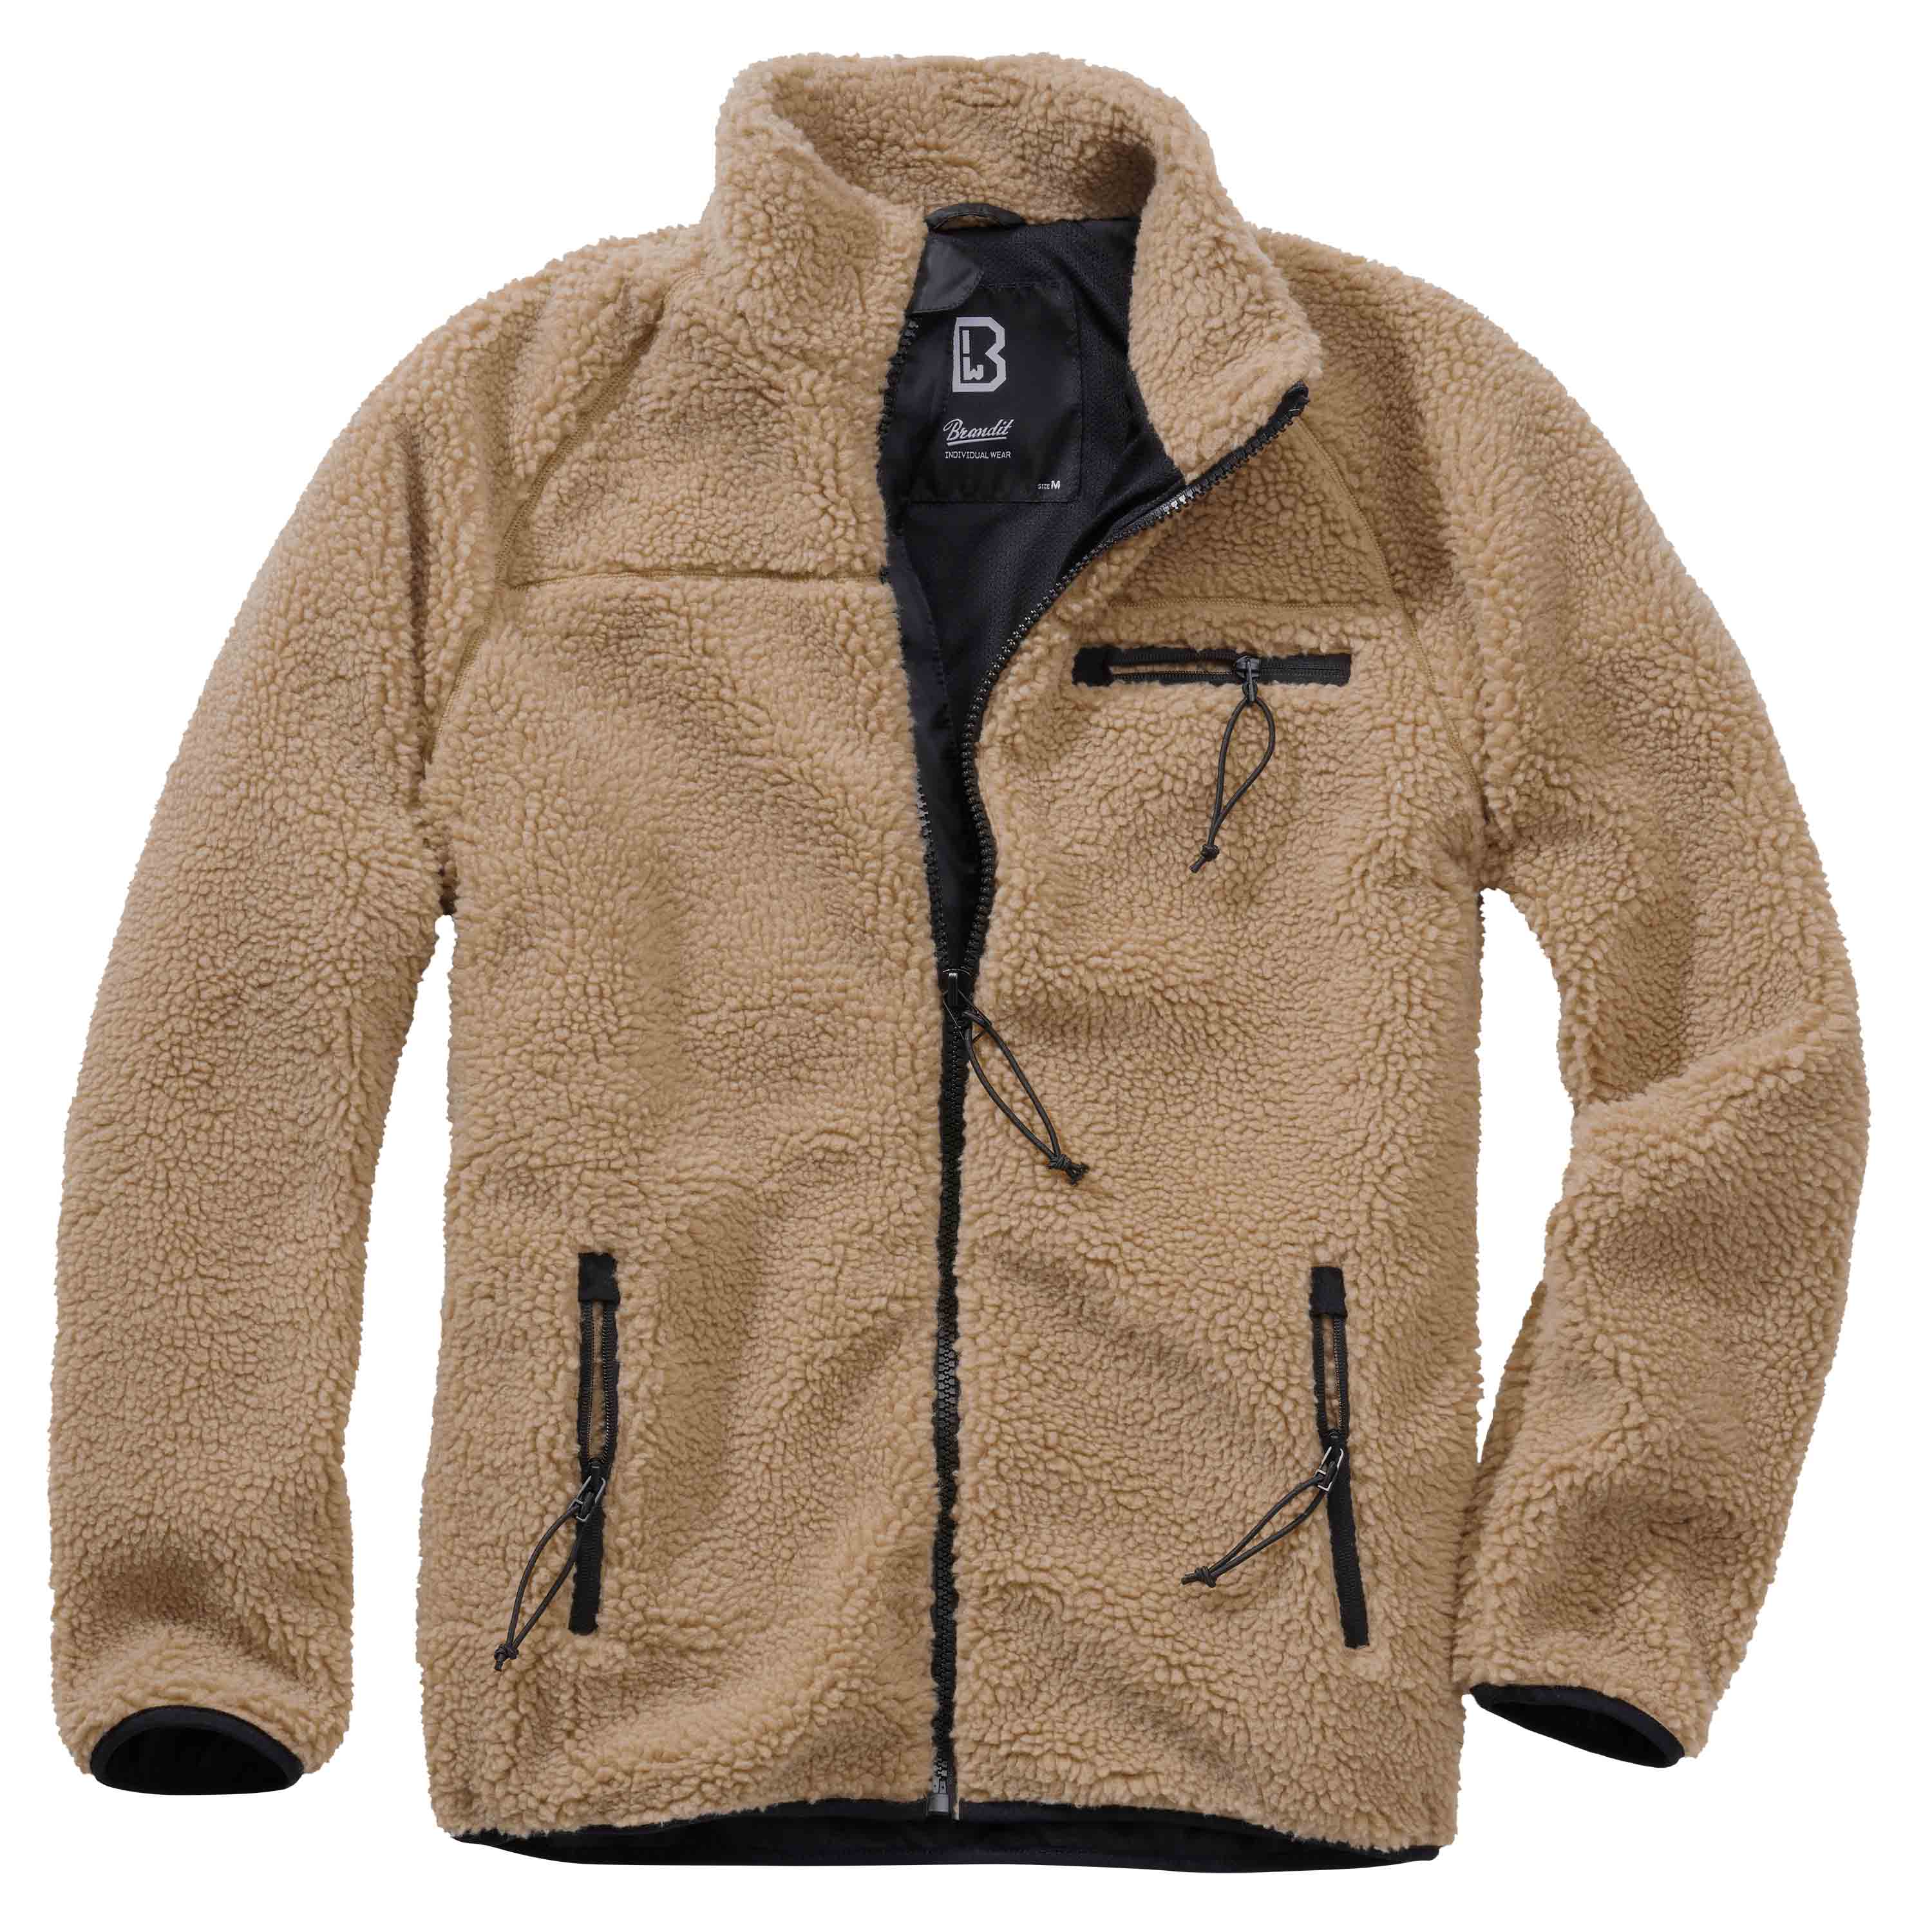 Purchase the Brandit Jacket Teddy Fleece olive by ASMC